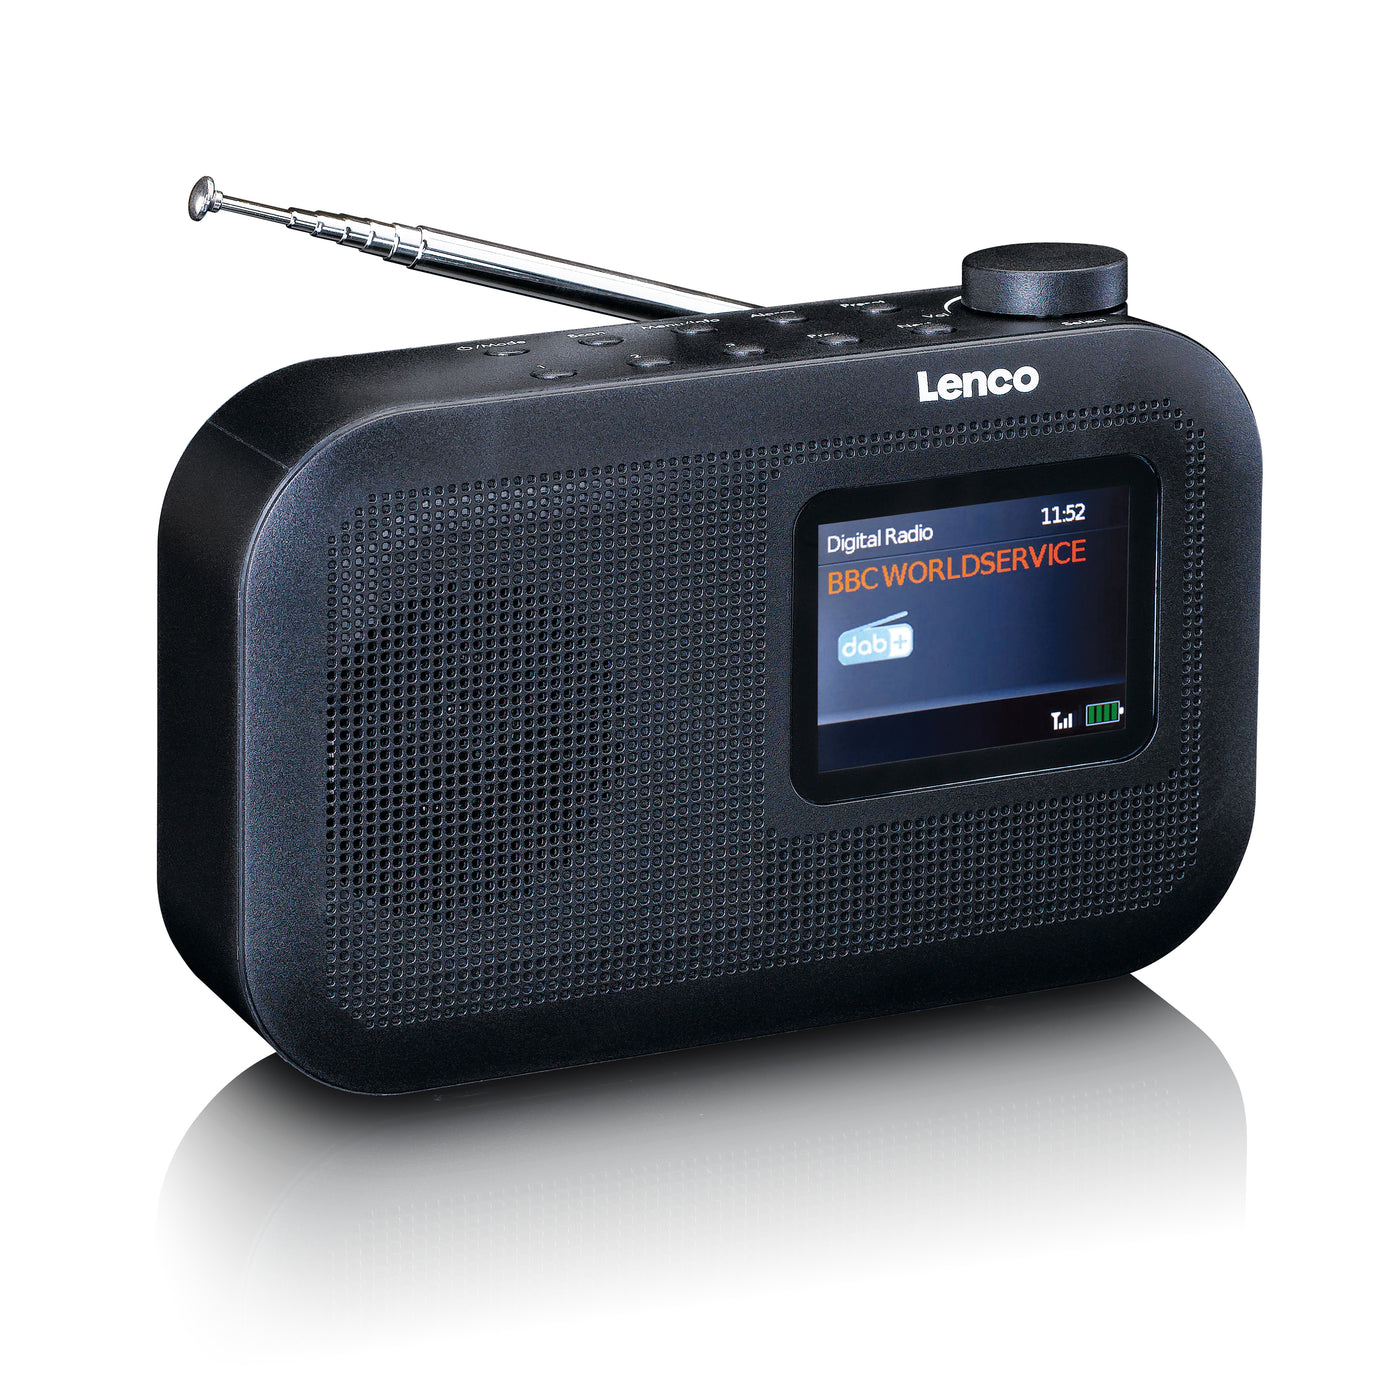 LENCO PDR-026BK - Portable DAB+/FM radio with Bluetooth® - Black